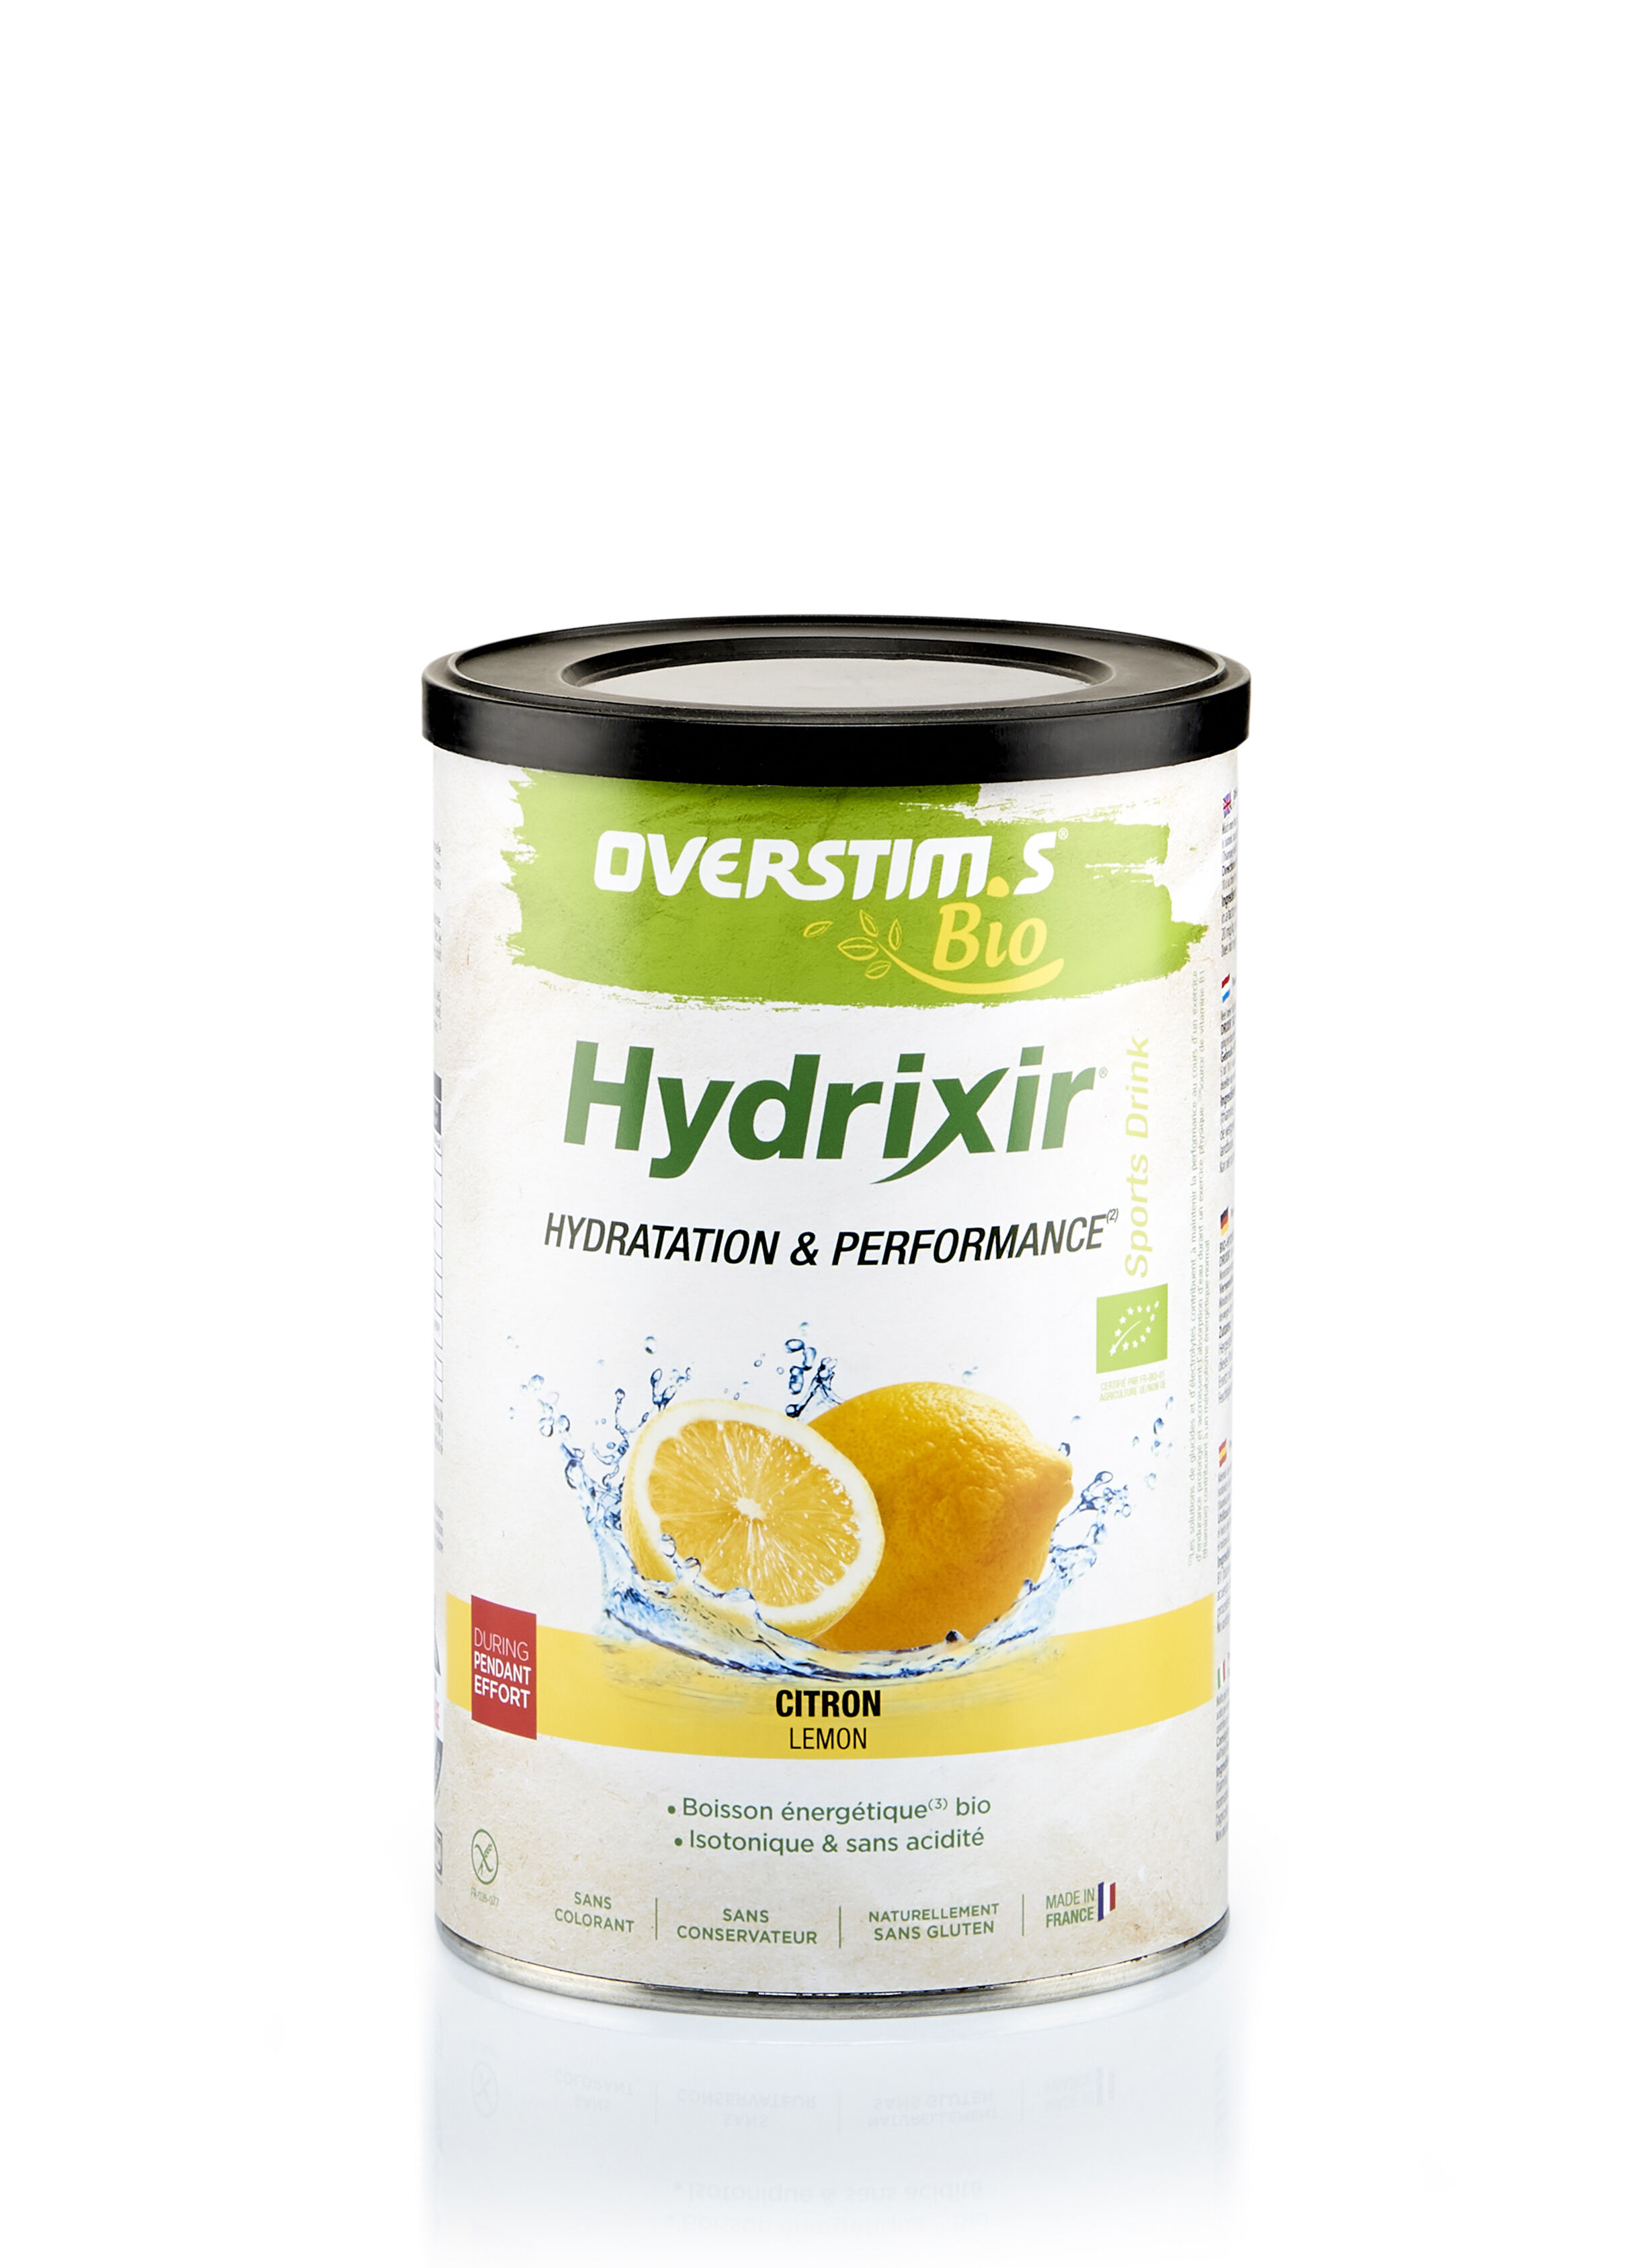 Overstim.s Hydrixir Antioxydant Bio - Energiedrank